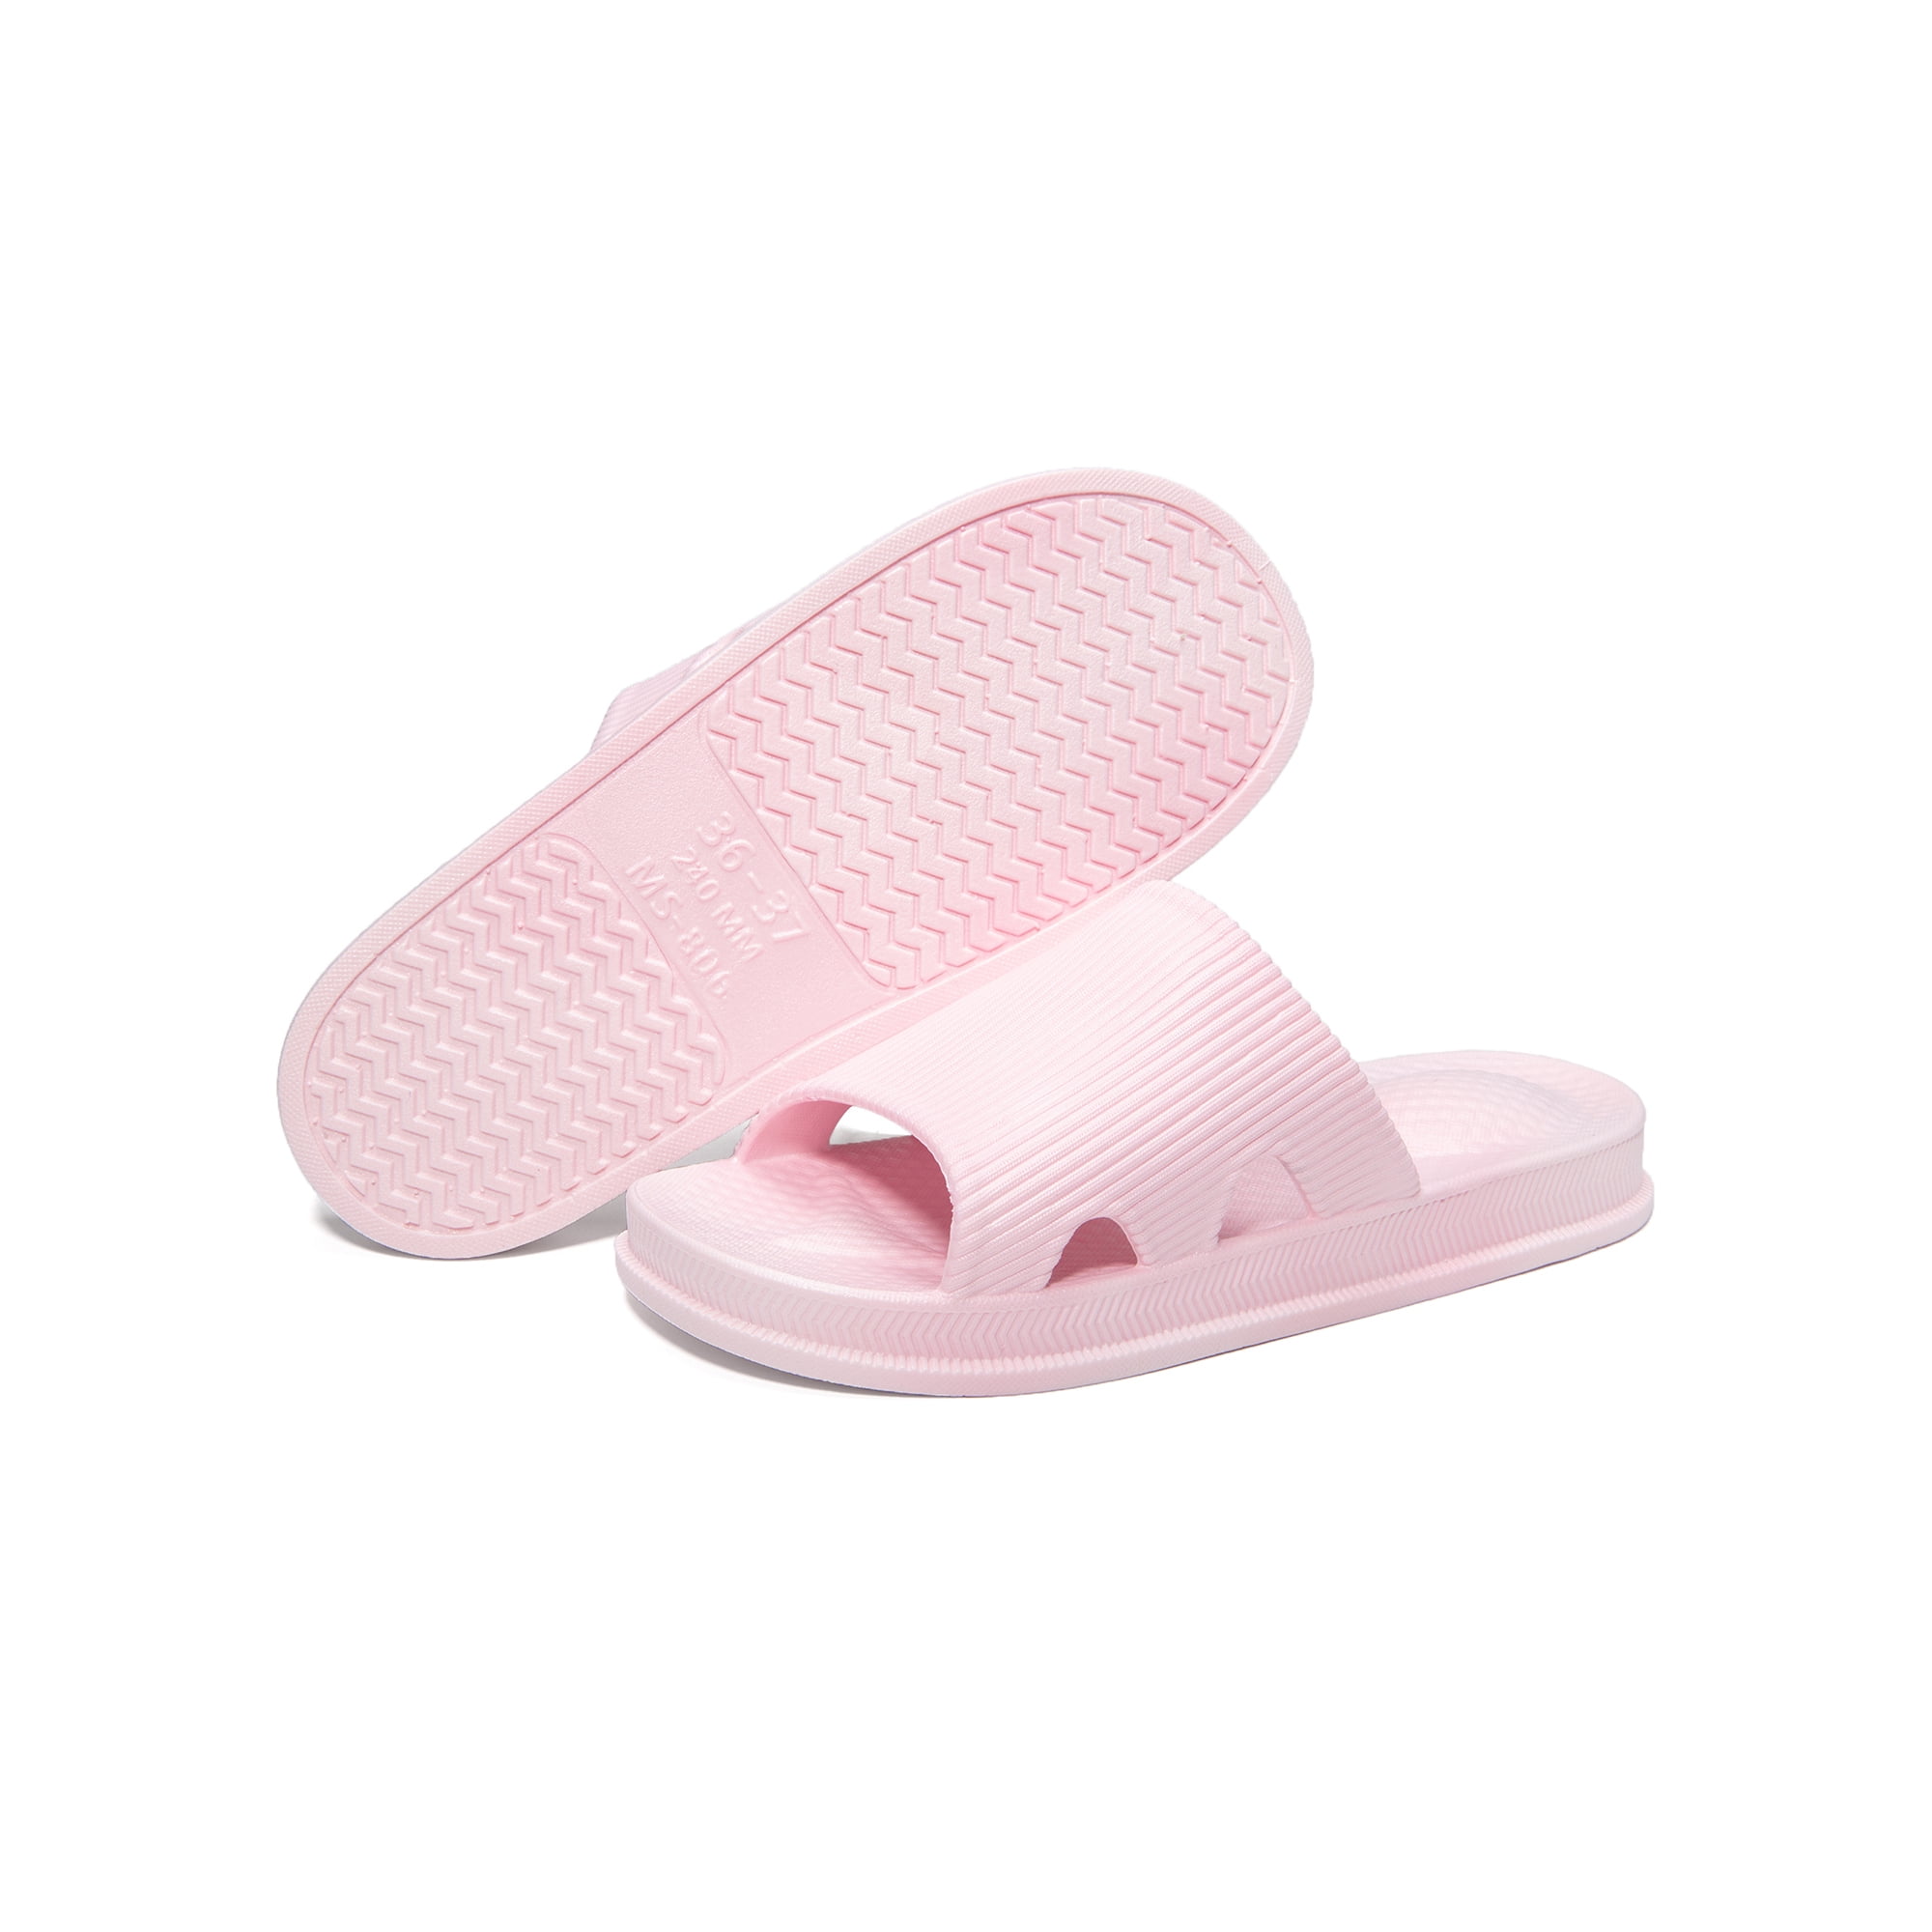 Nwarmsouth Open Toe Sandals,Non-slip massage flip flops beach shoes outside outdoor soft bottom sandals,Anti-slip Shower Sandals